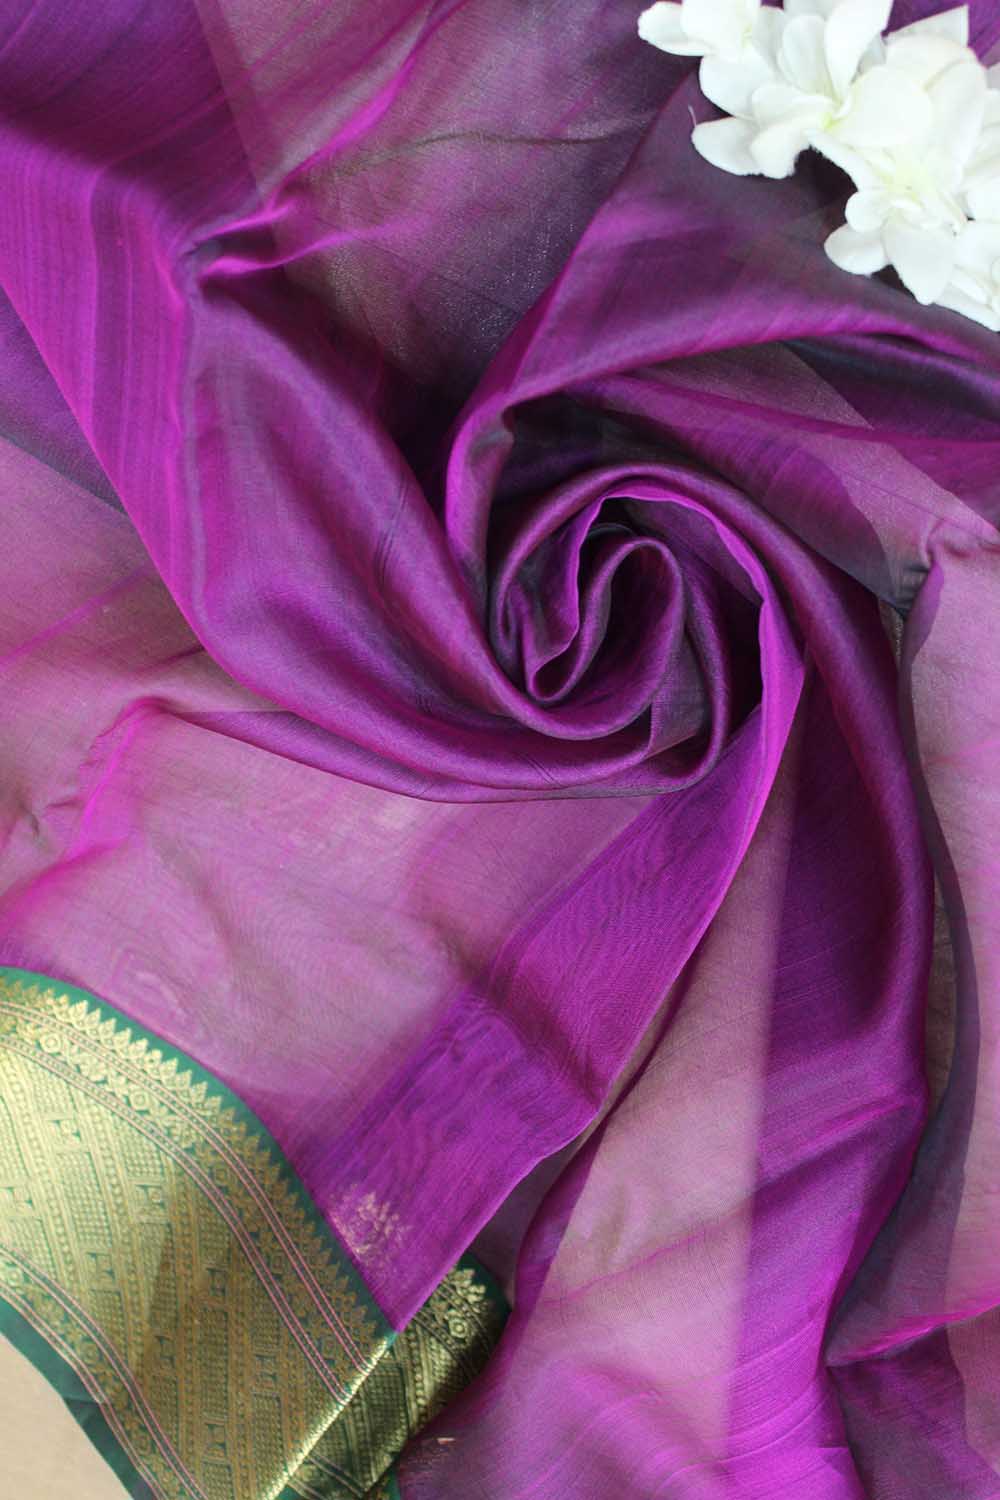 Purple Handloom Chanderi Pure Katan Silk Saree - Luxurion World